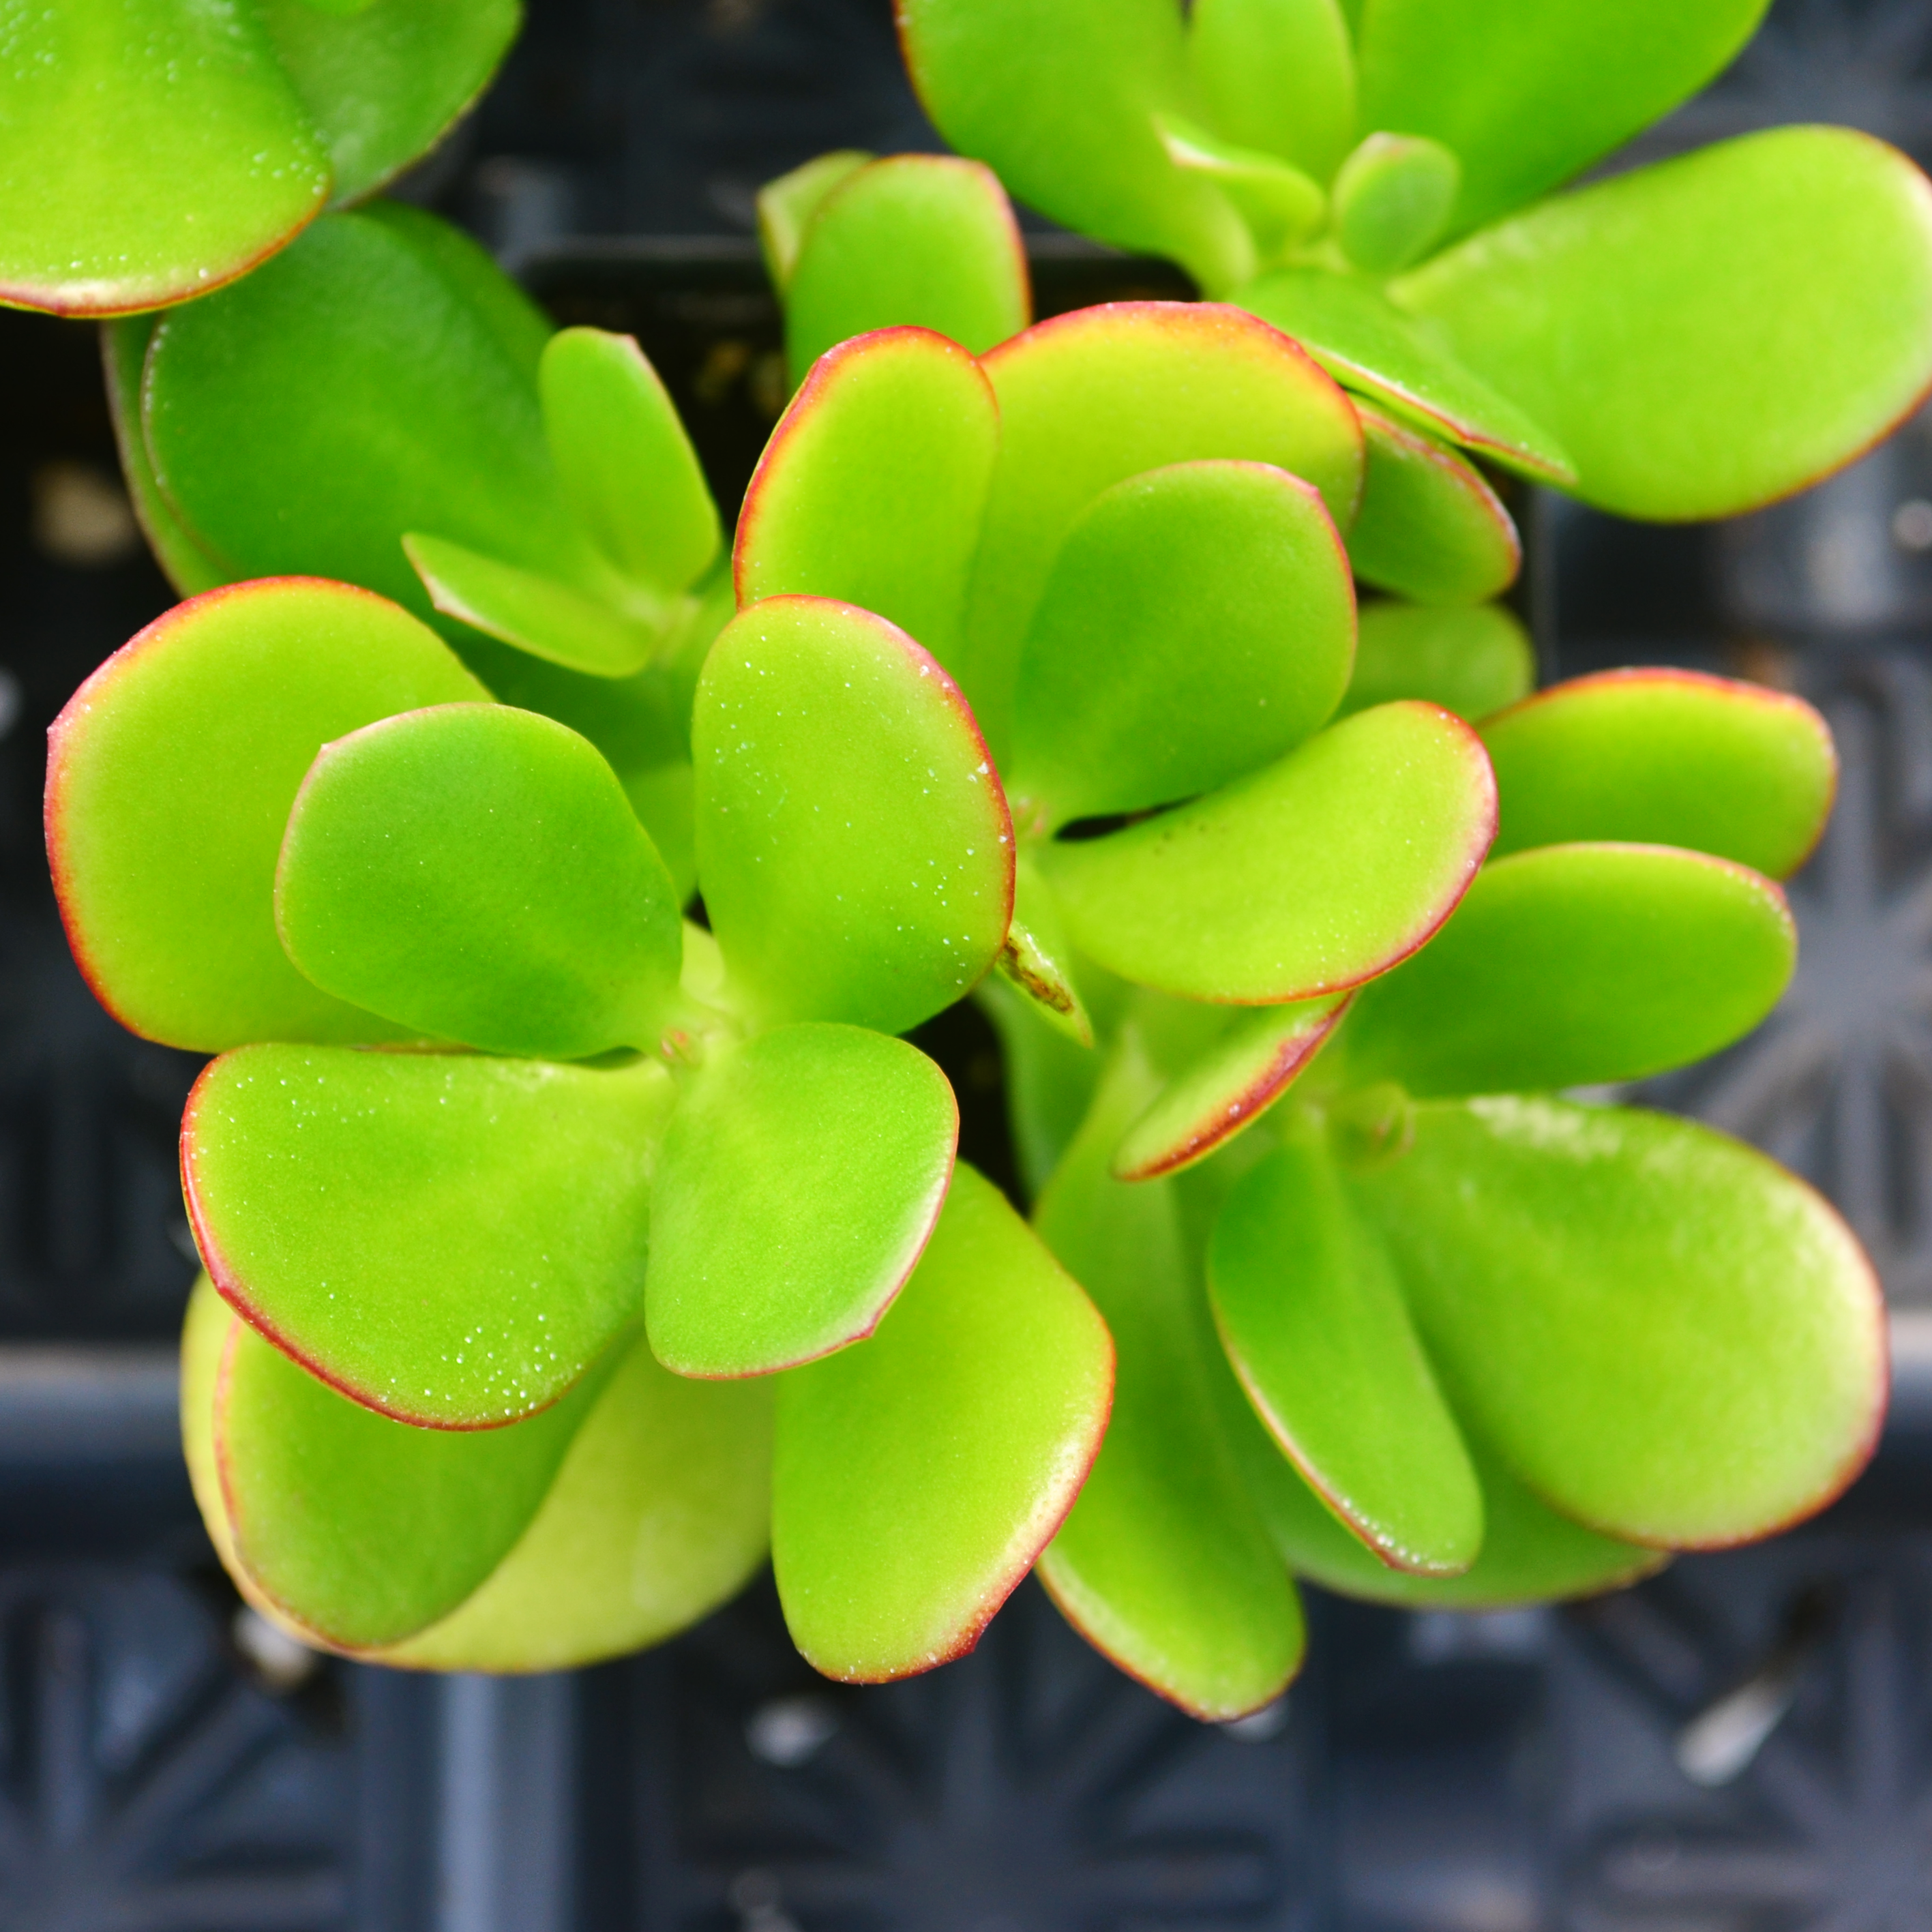 Crassula ovata 'Compact' - Jade Plant from Hillcrest Nursery